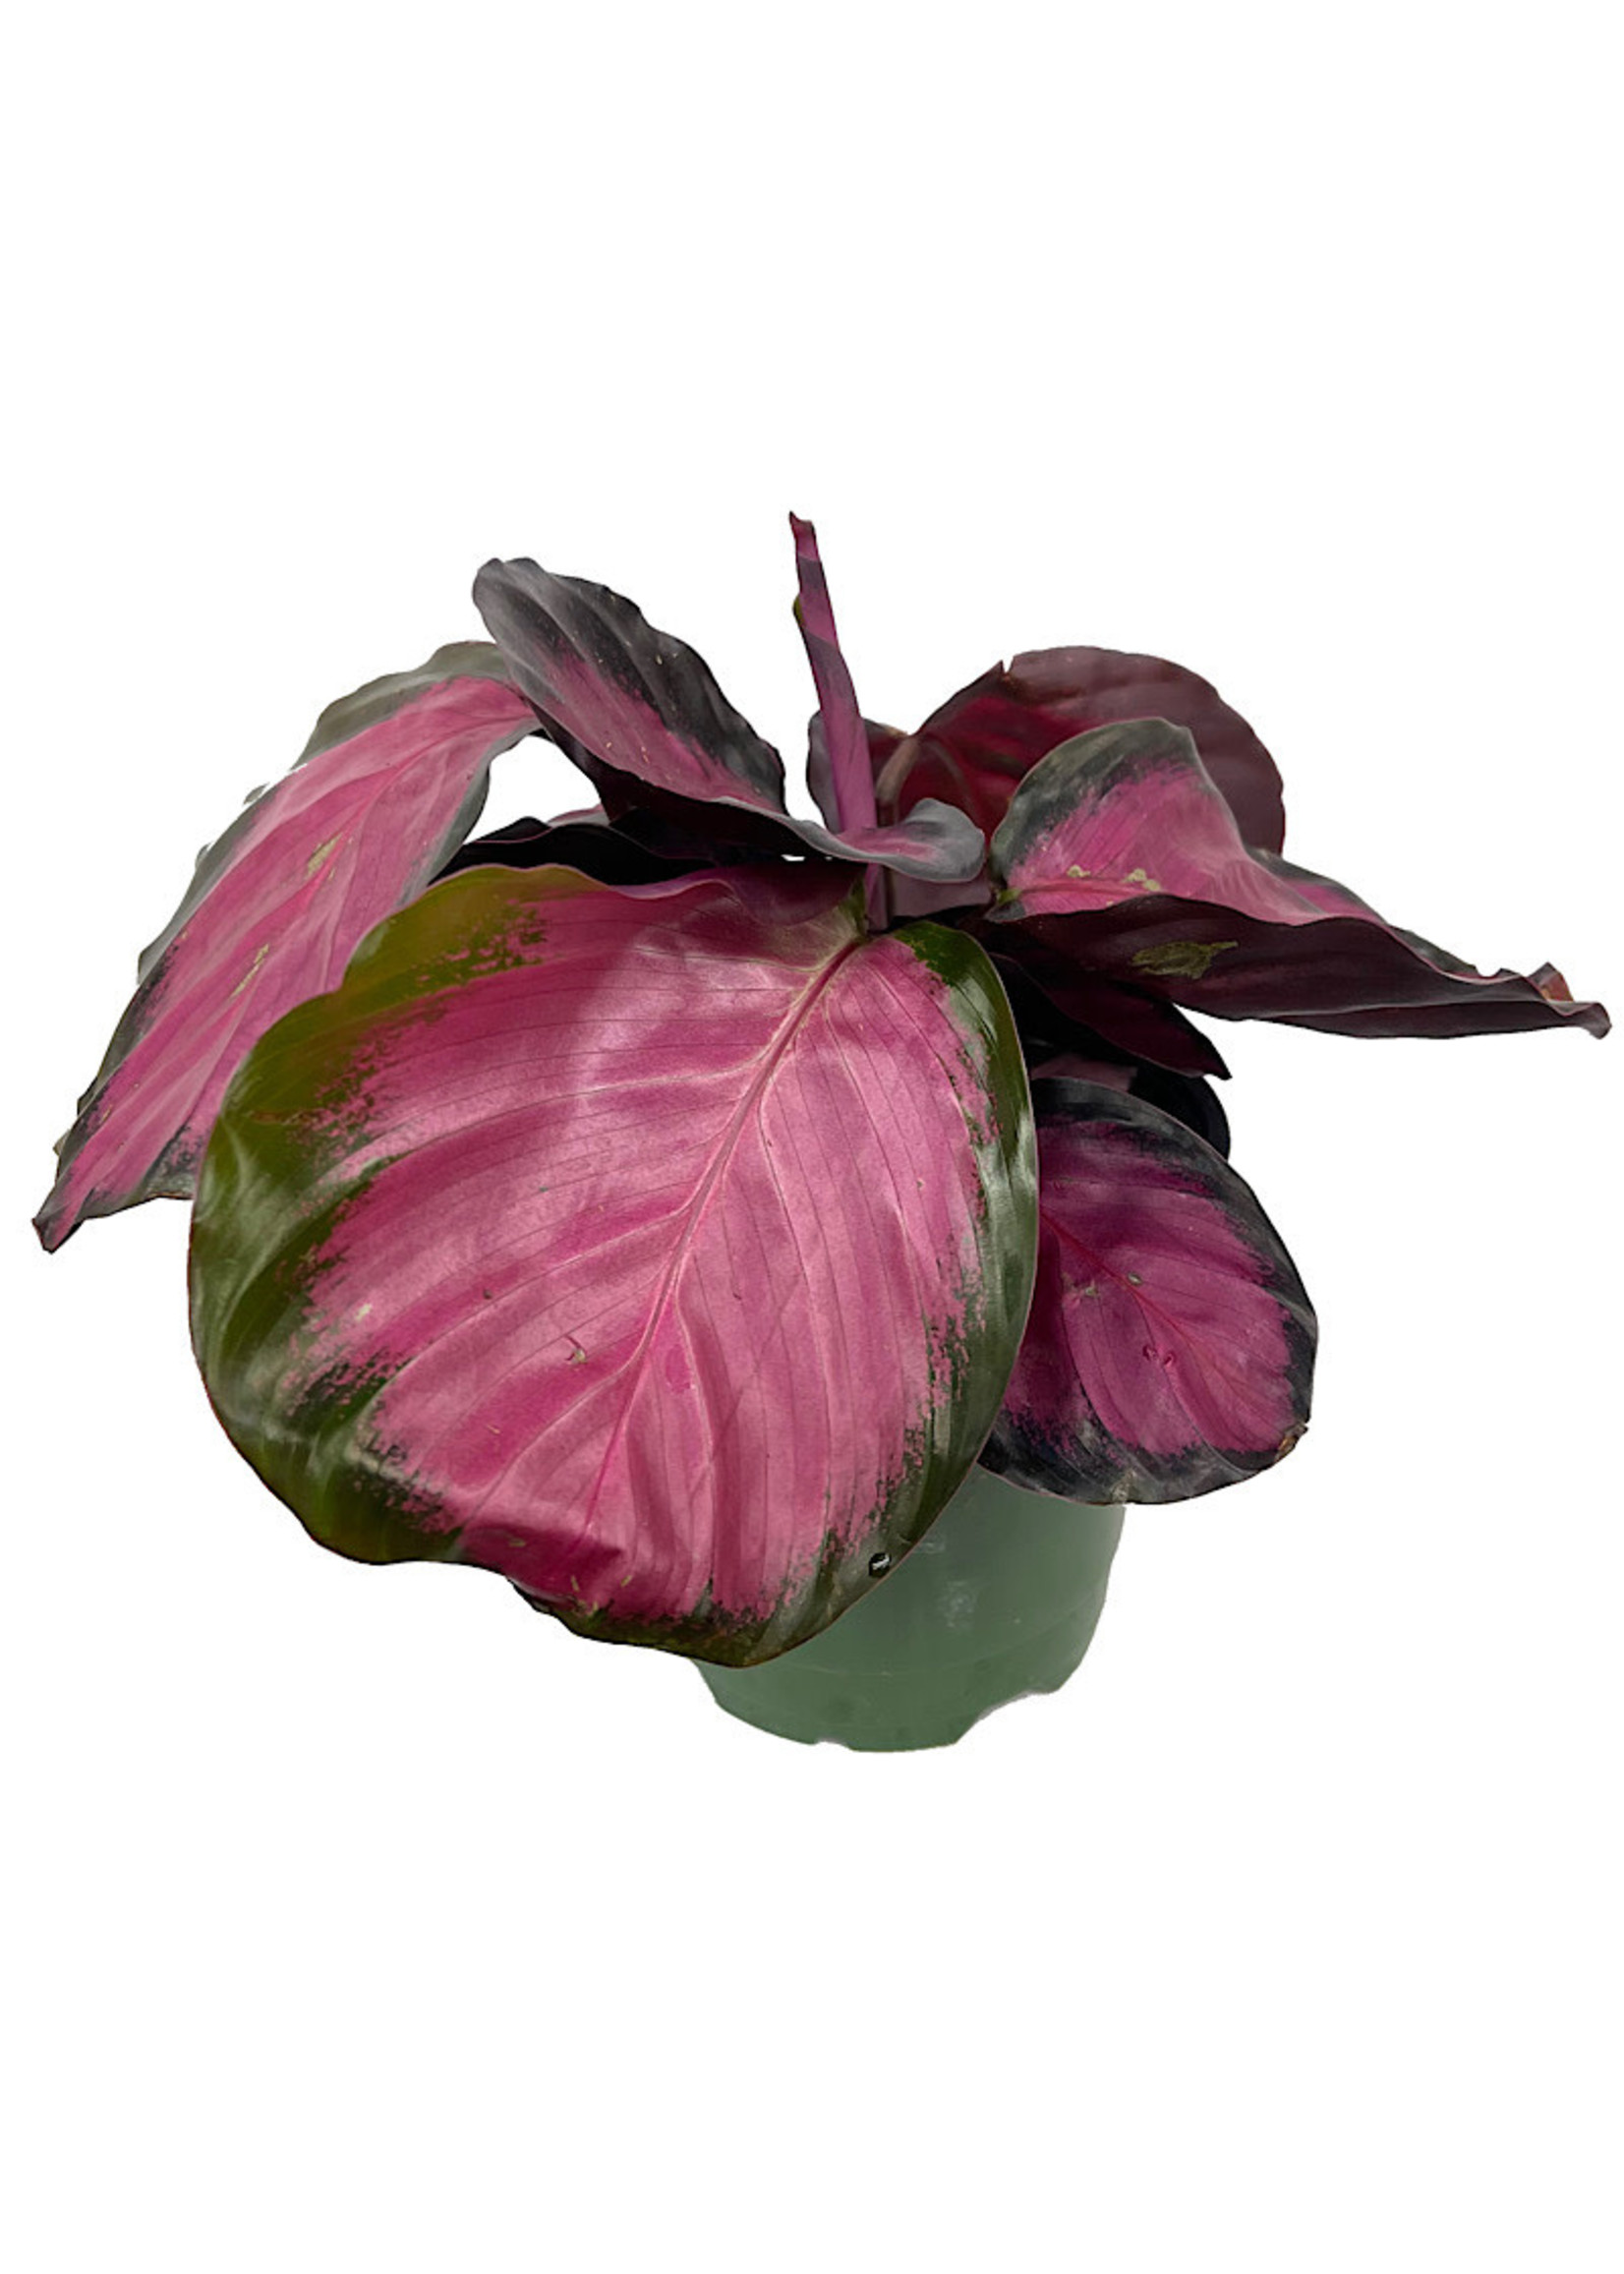 Calathea roseopicta ‘Rosey’ 4 Inch